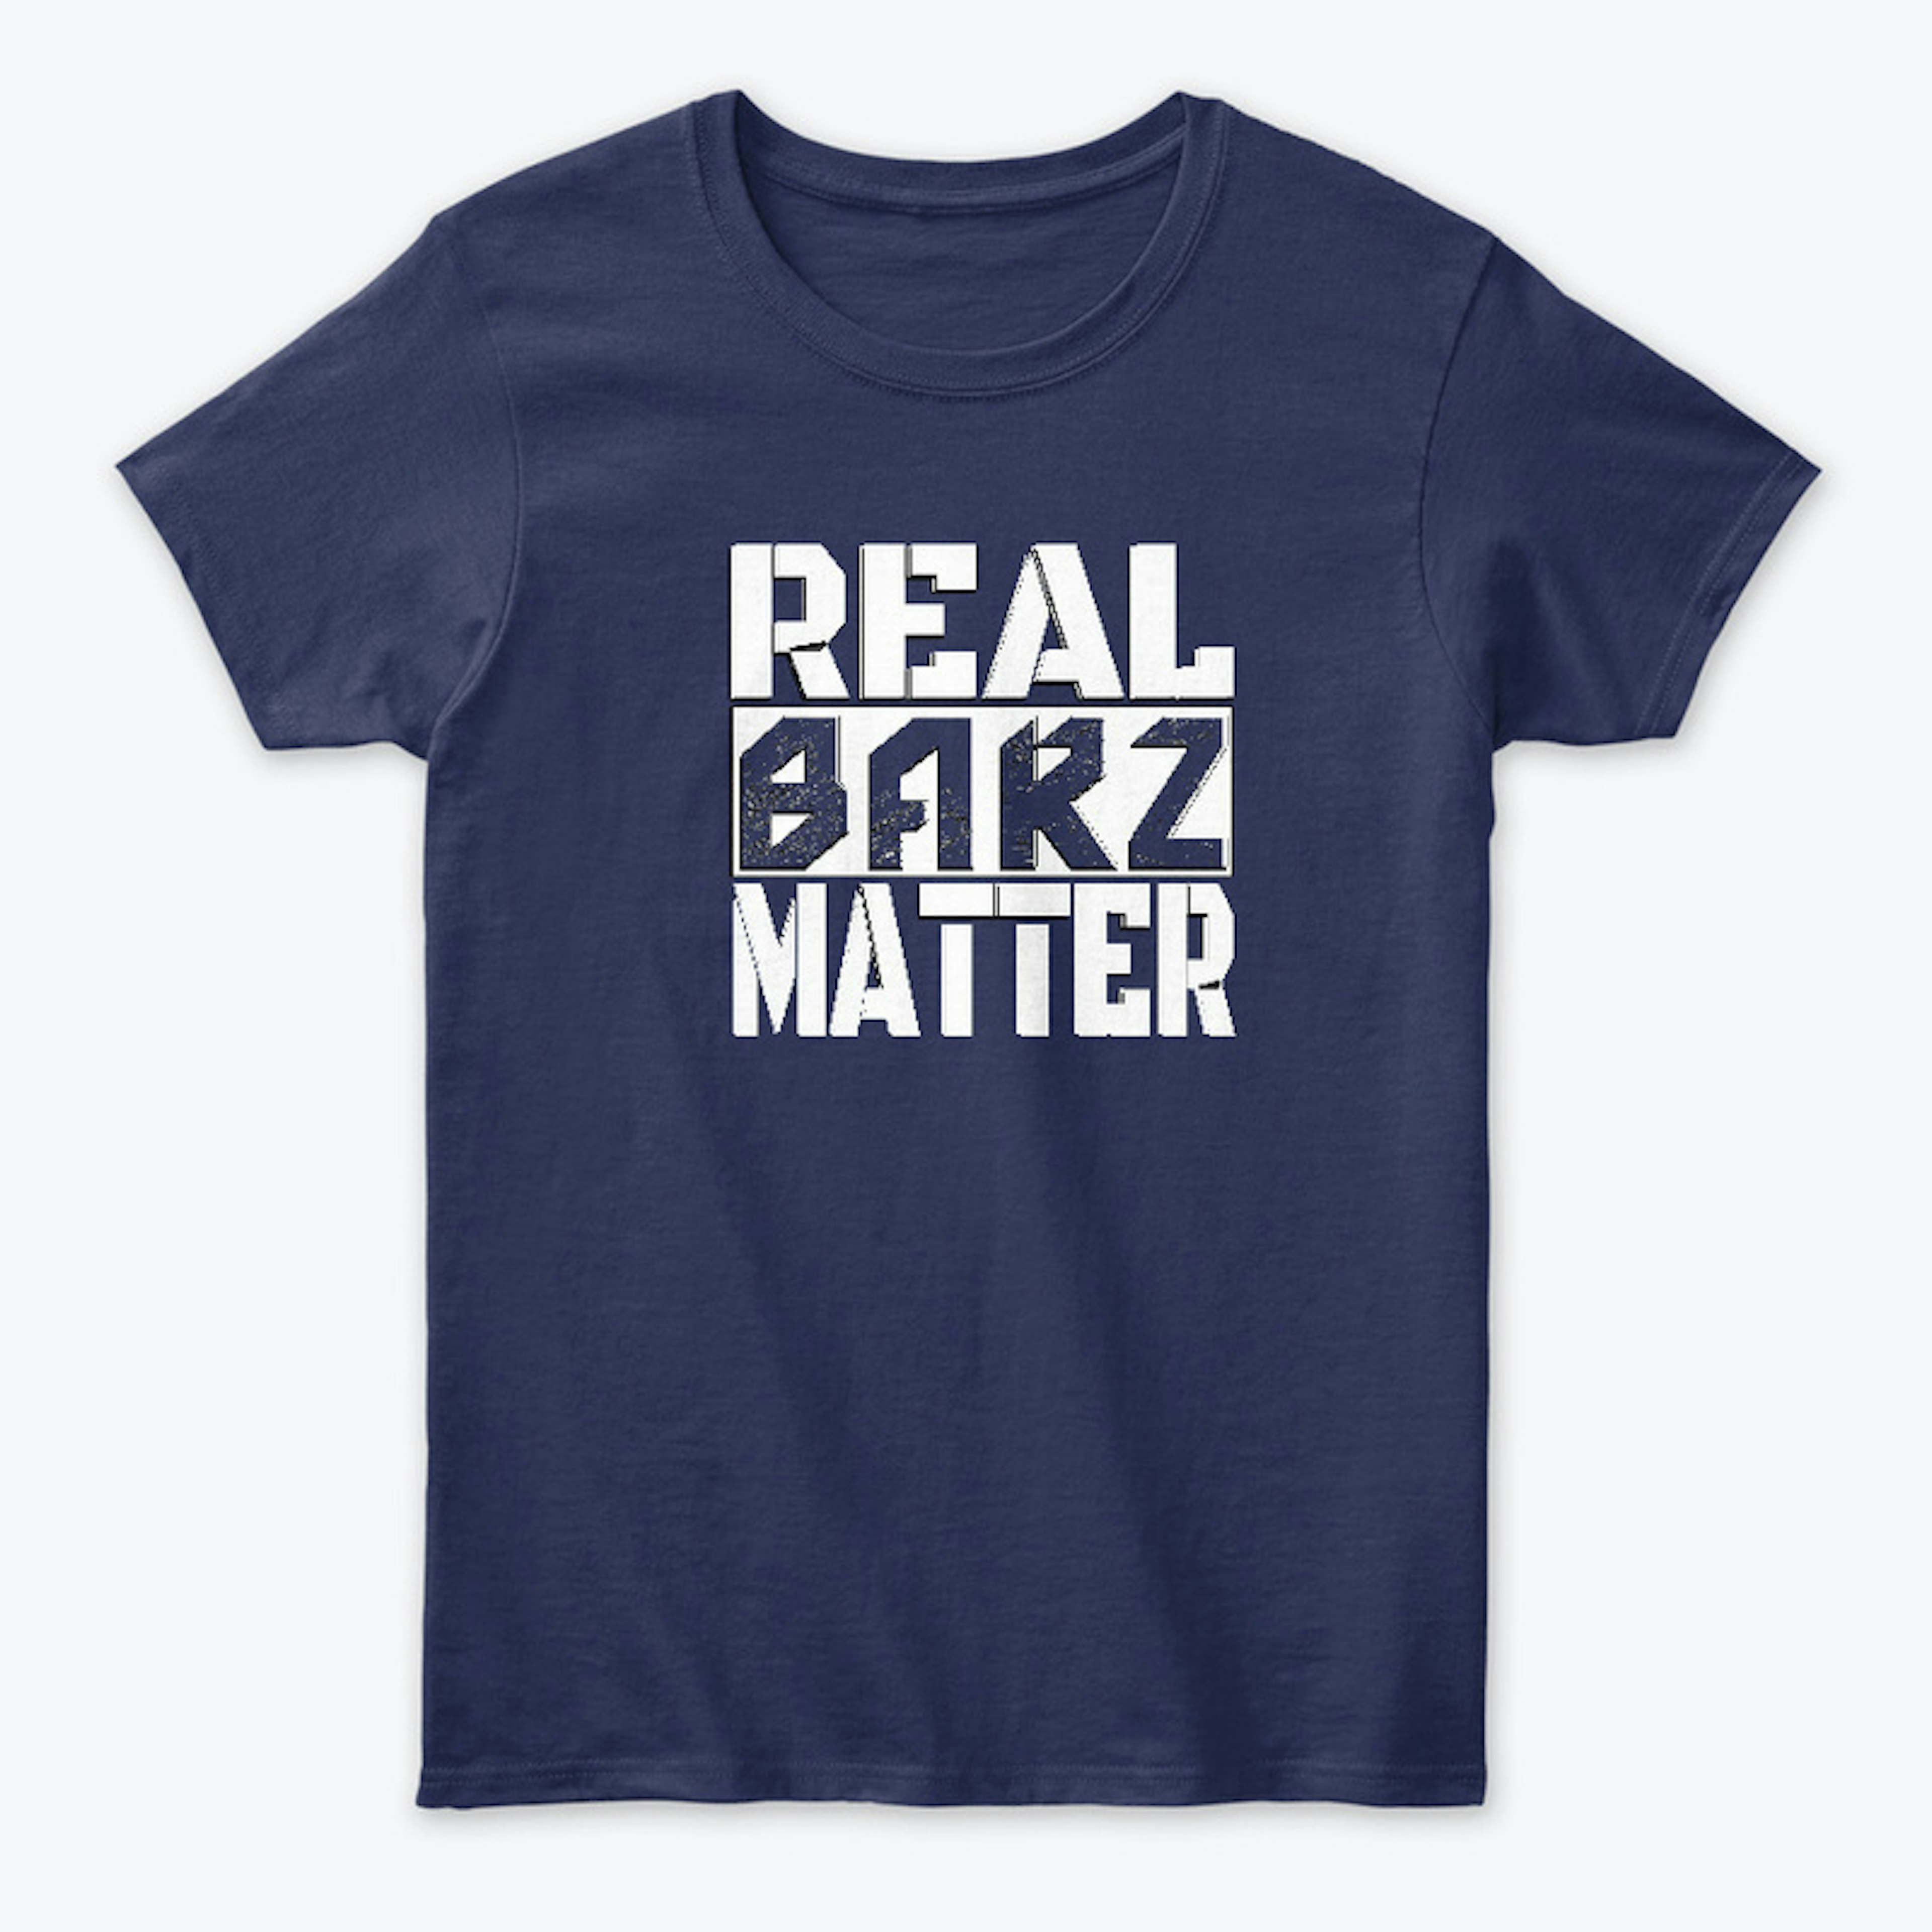 Real Barz Matter